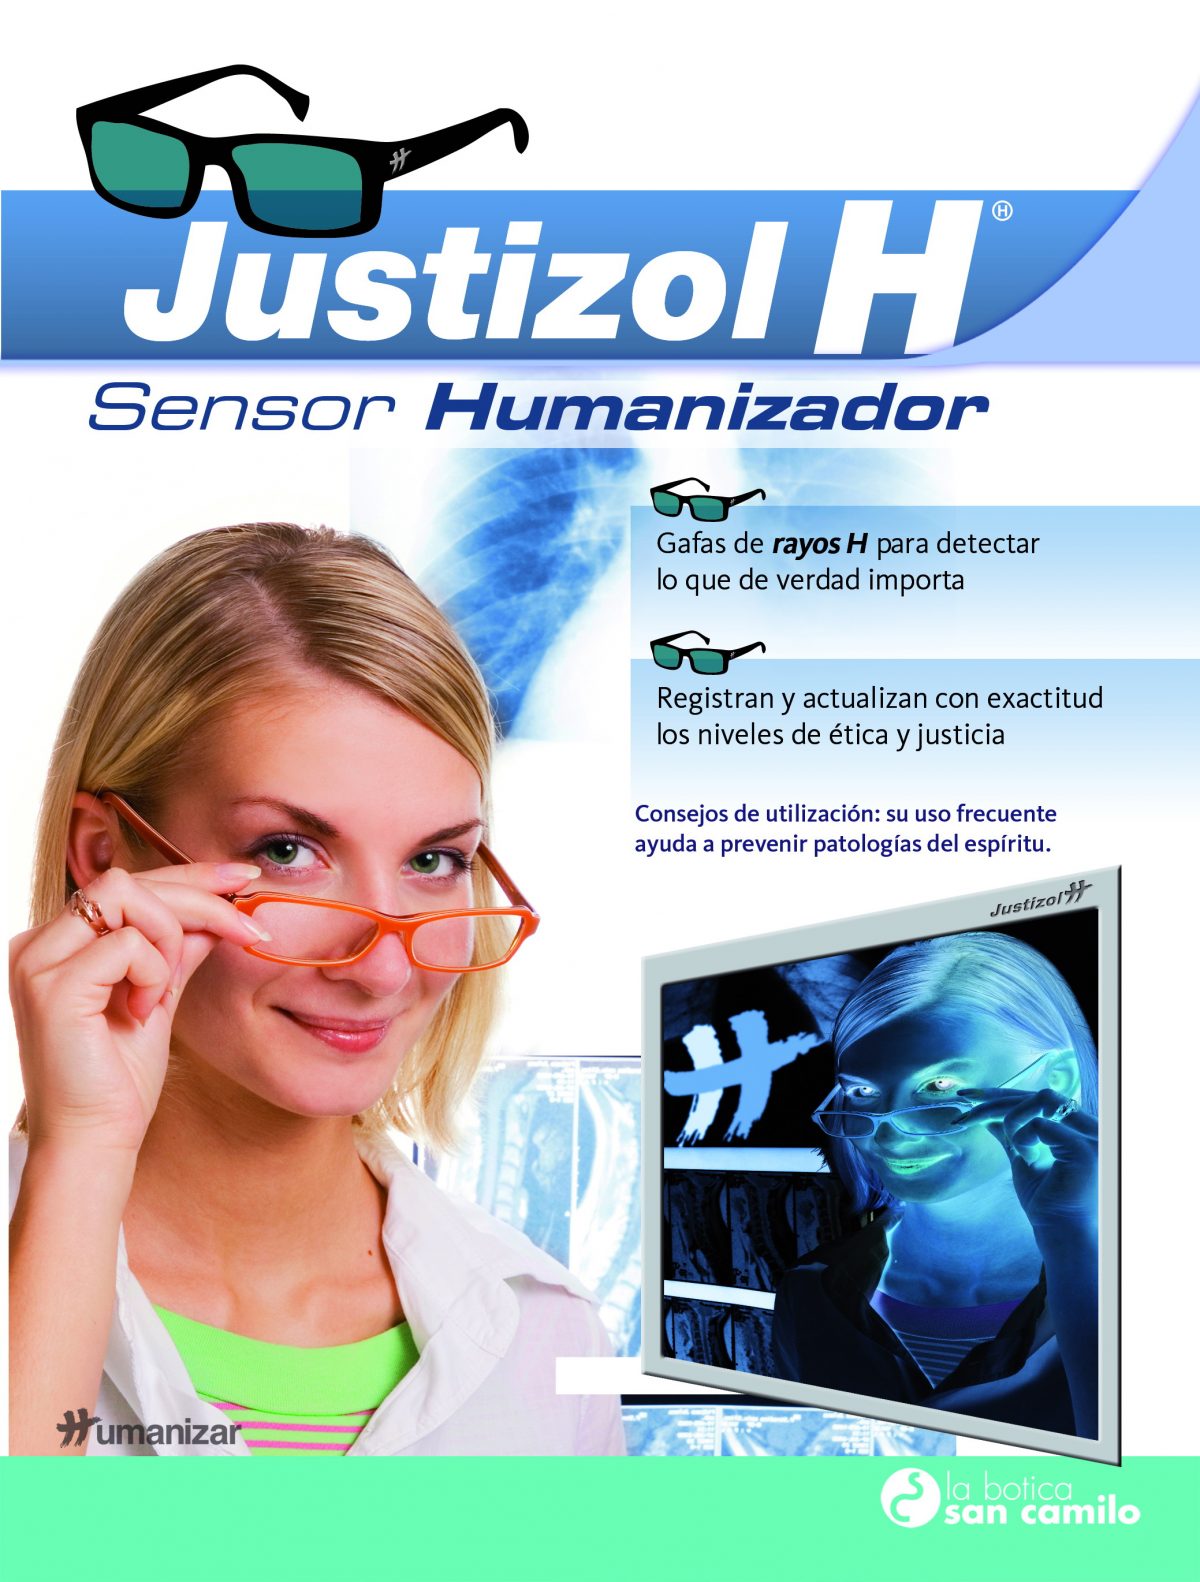 Justizol H. Sensor Humanizador